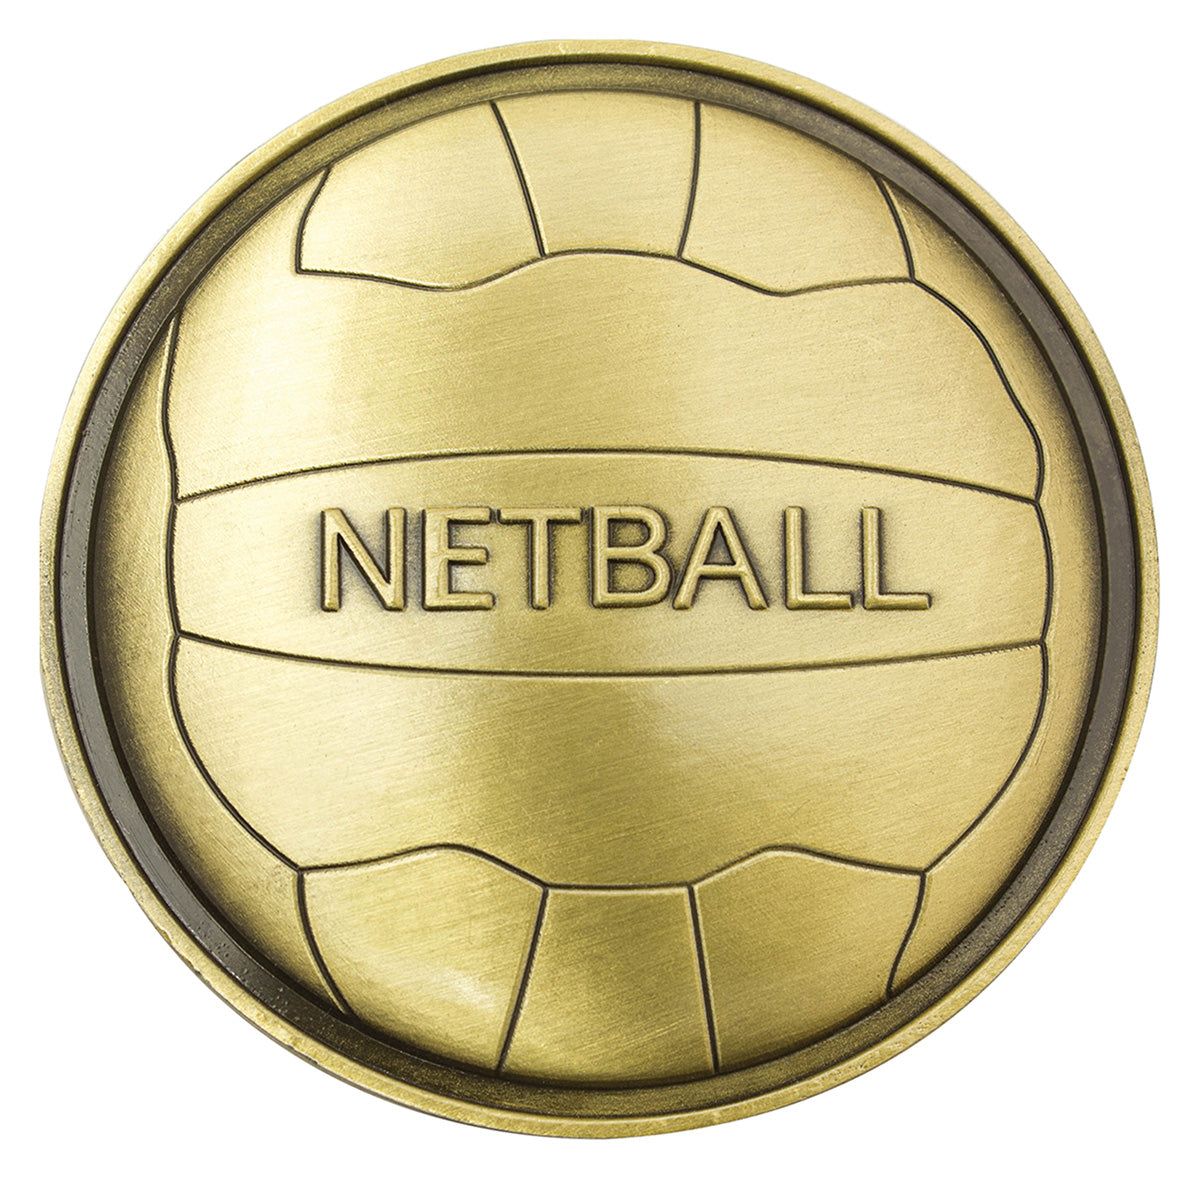 Netball